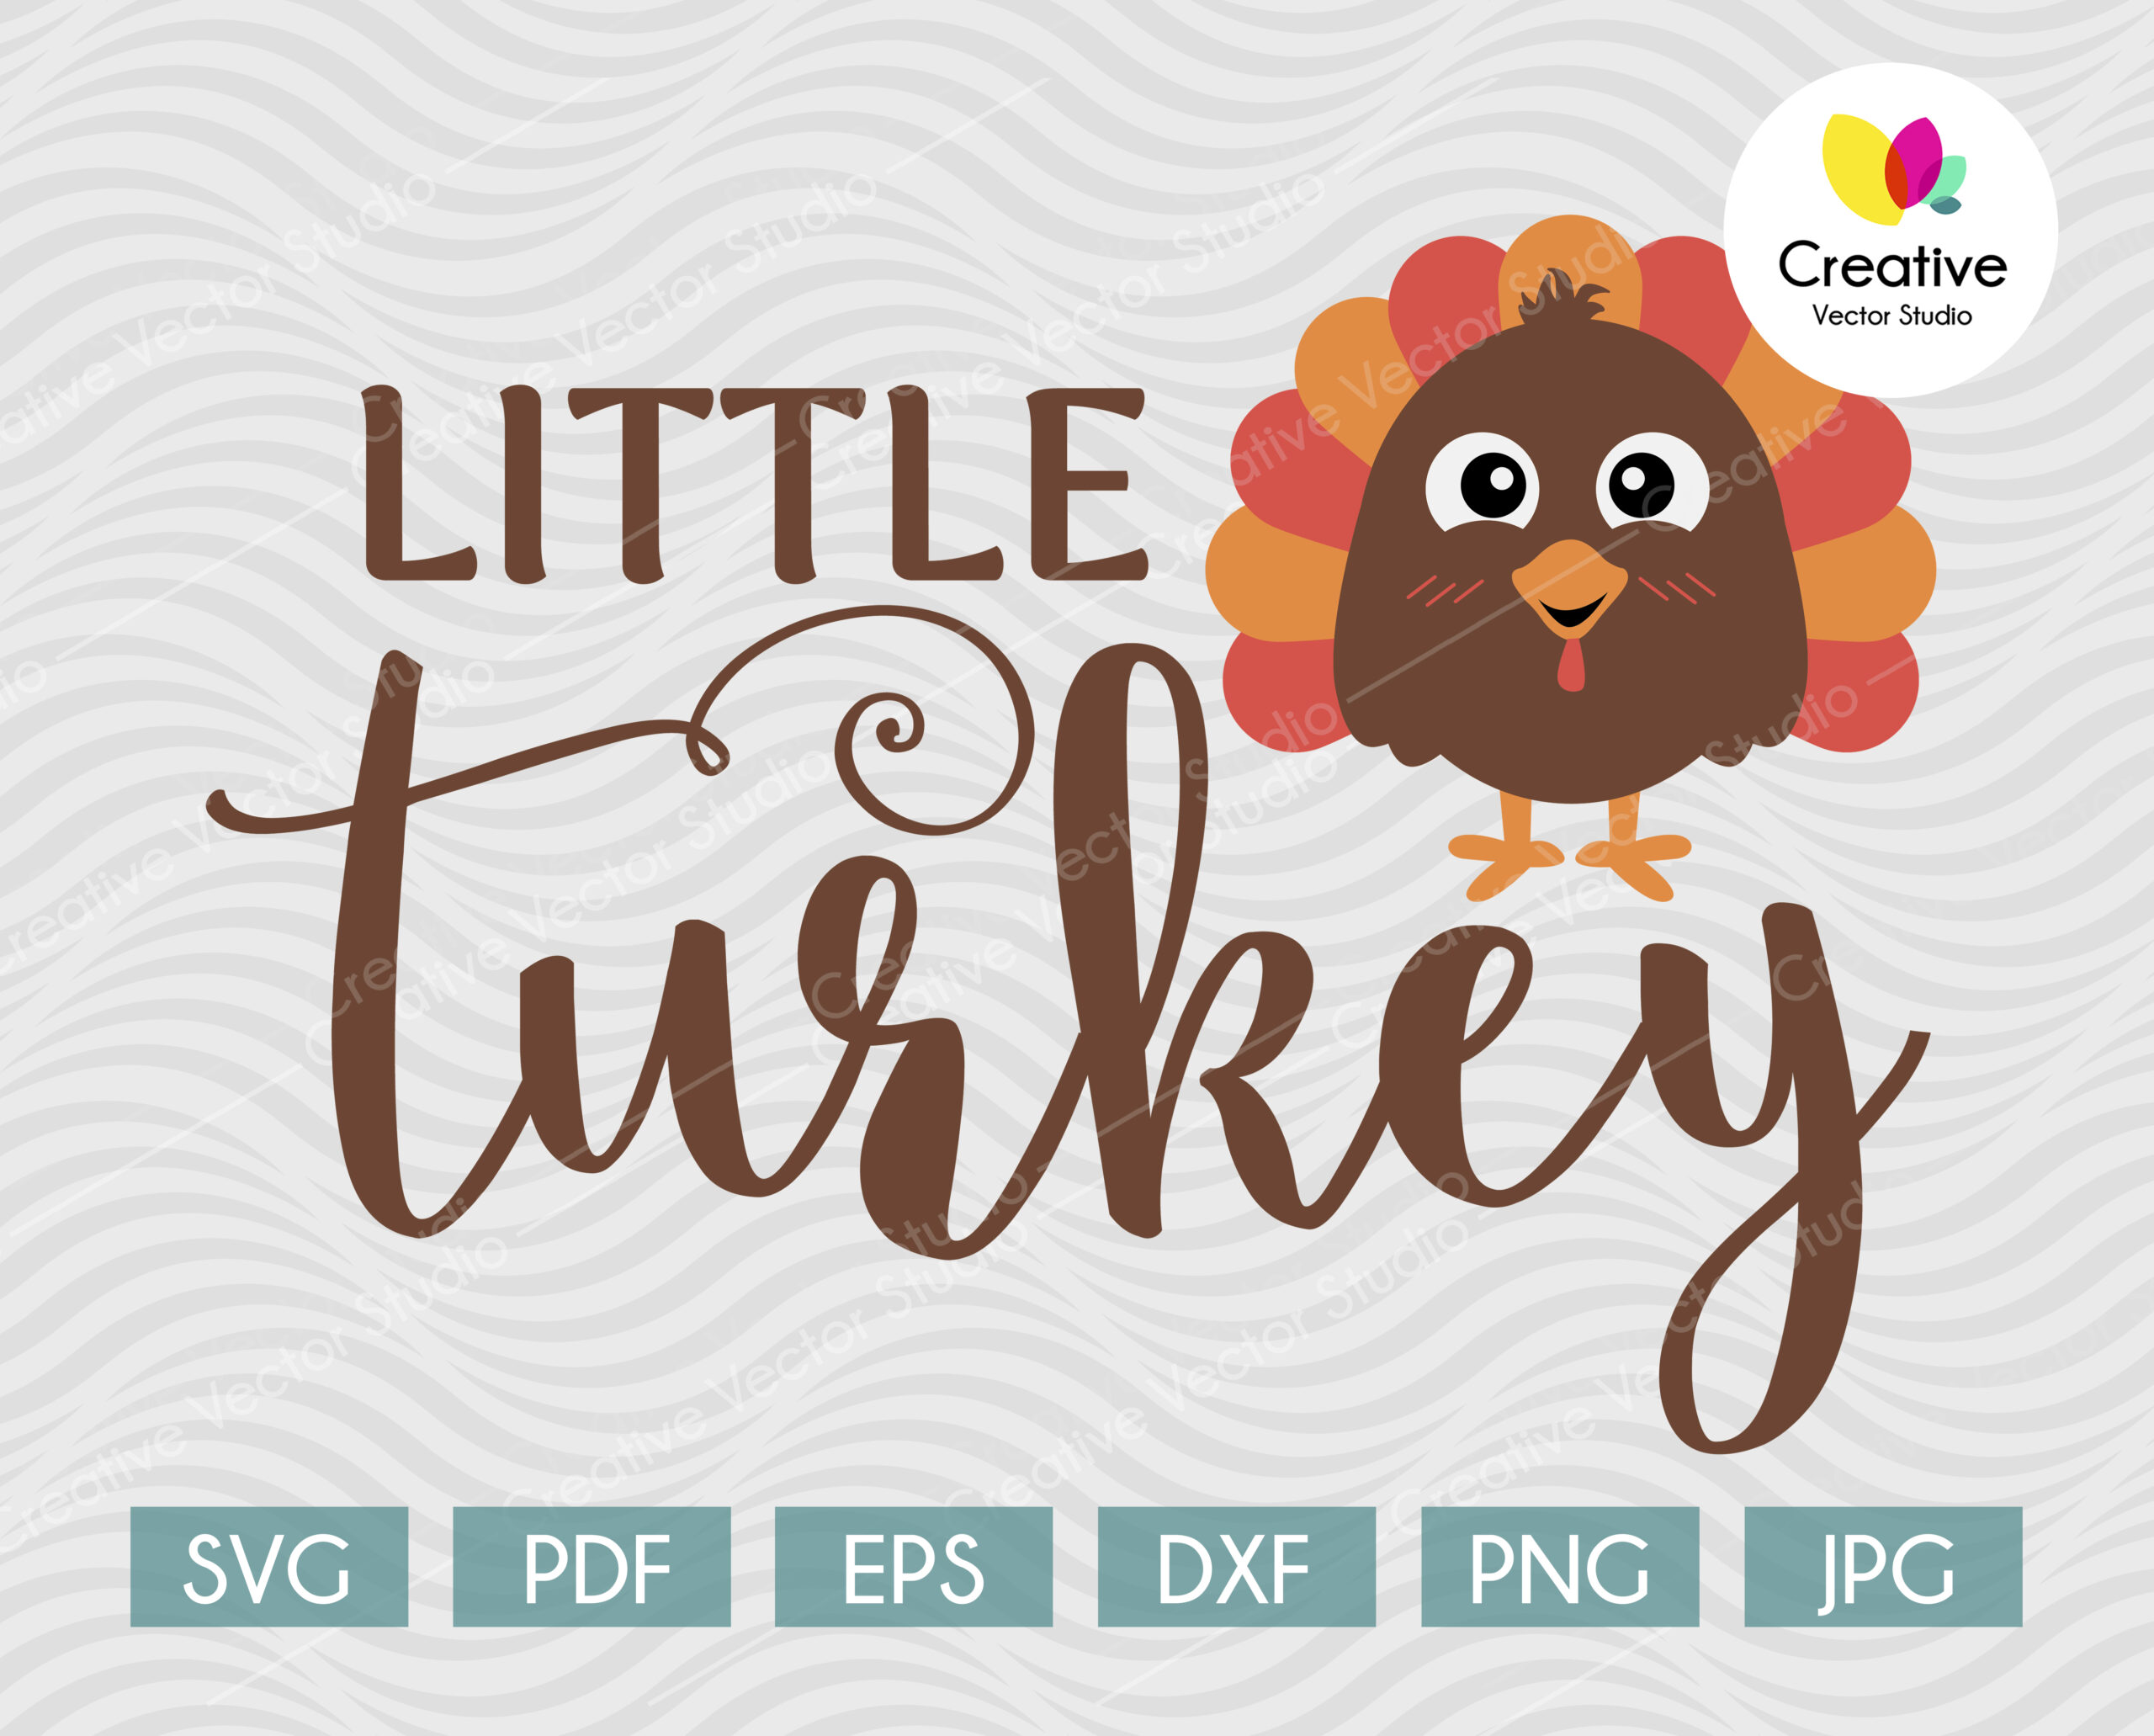 Little Turkey svg, Thanksgiving svg, Fall svg, Thanksgiving svg quotes